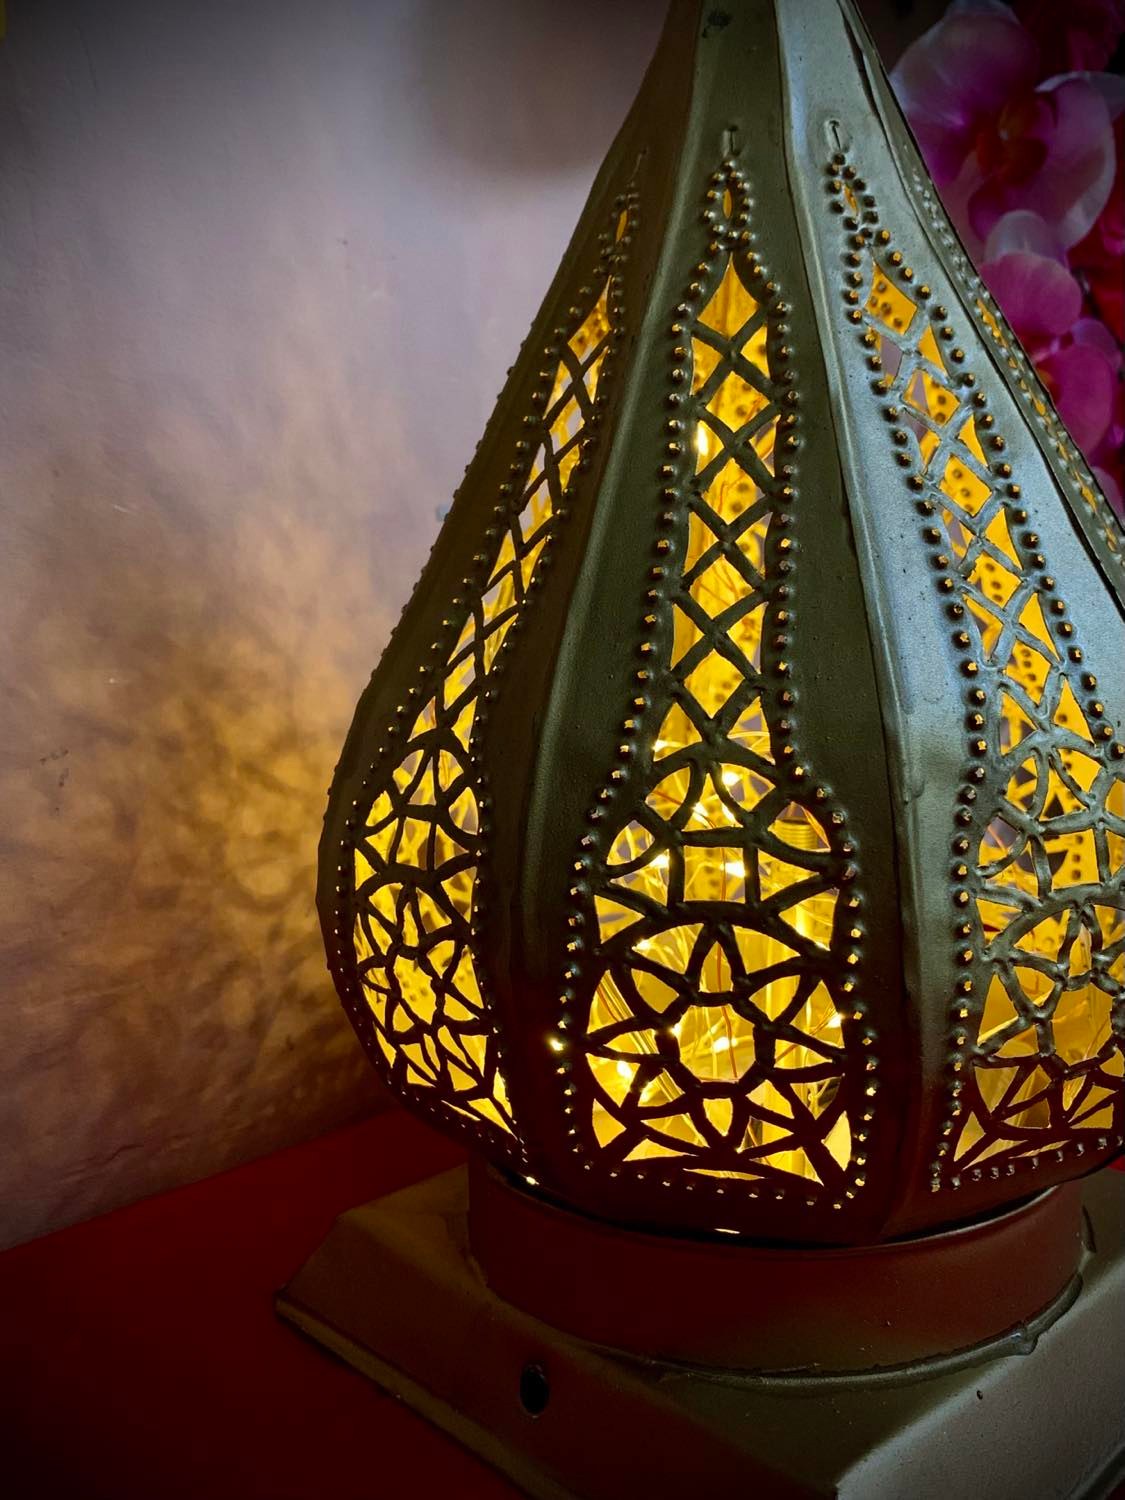 Moroccan Onion Lamp